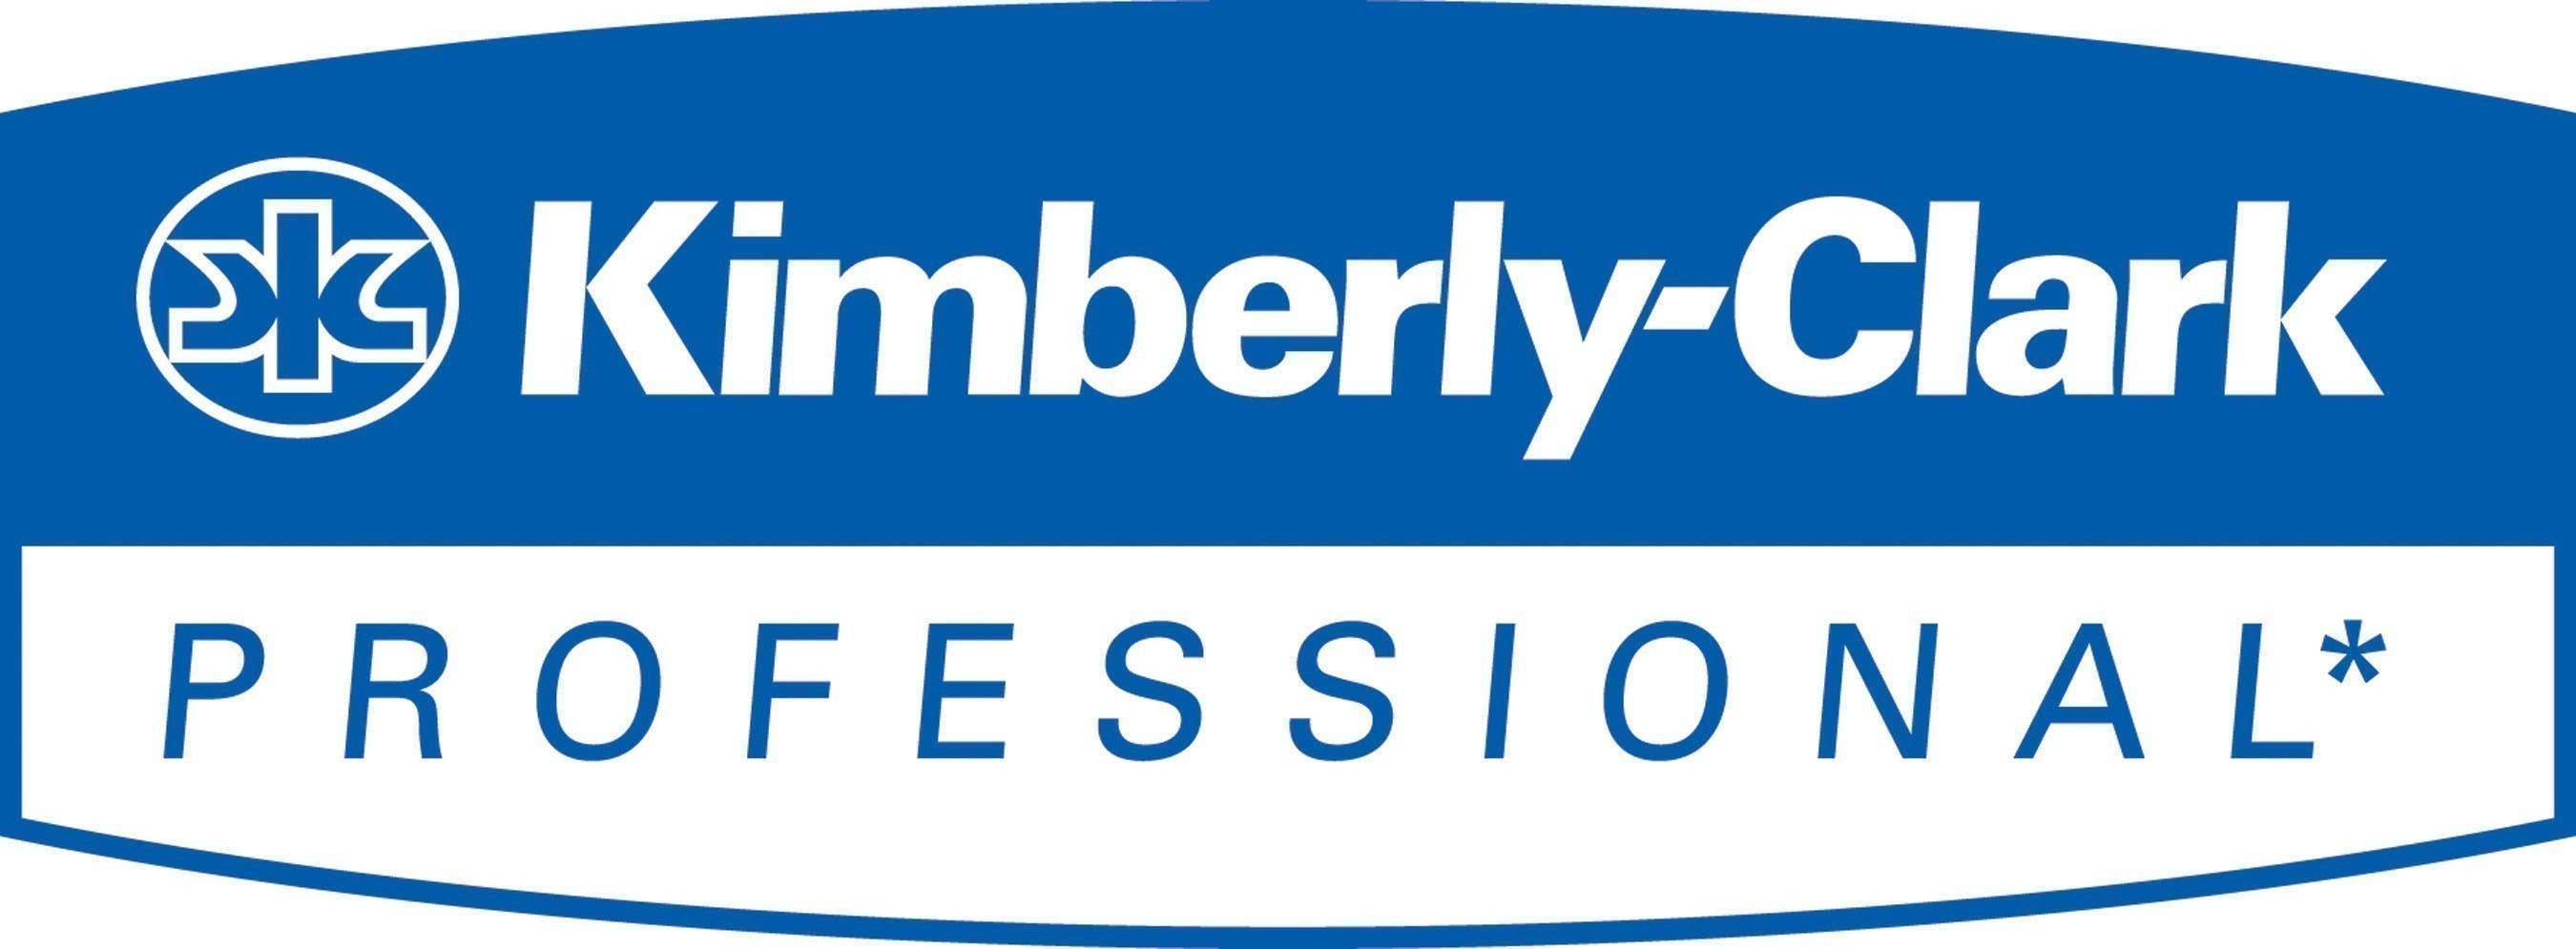 Kimberly-Clark Professional Logo.